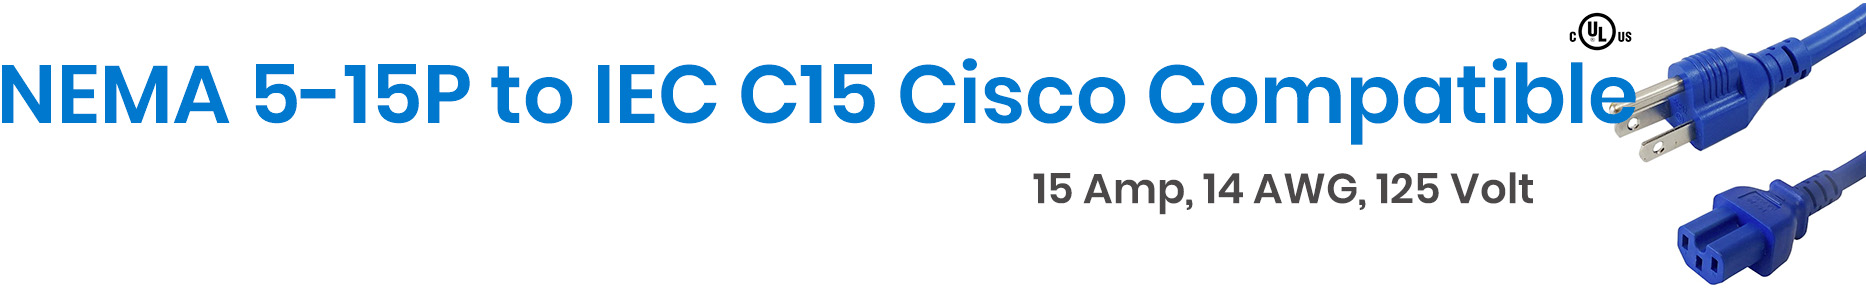 NEMA 5-15P to IEC C15 for Cisco Compatible Power Cords